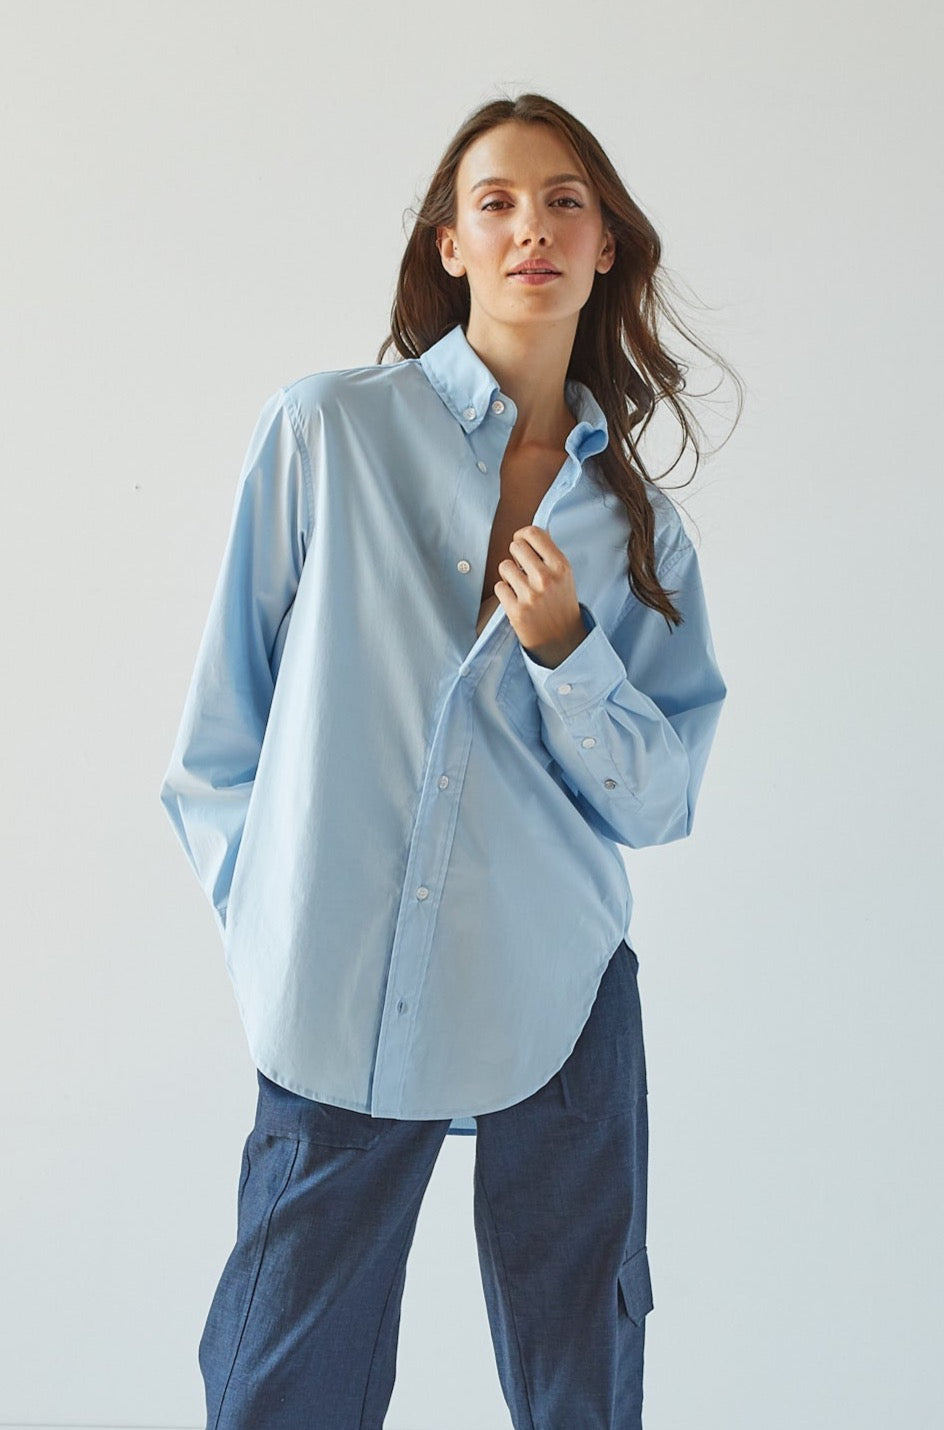 Adroit Atelier's Kean Boyfriend Solid Button-Down Shirt in Blue Sky